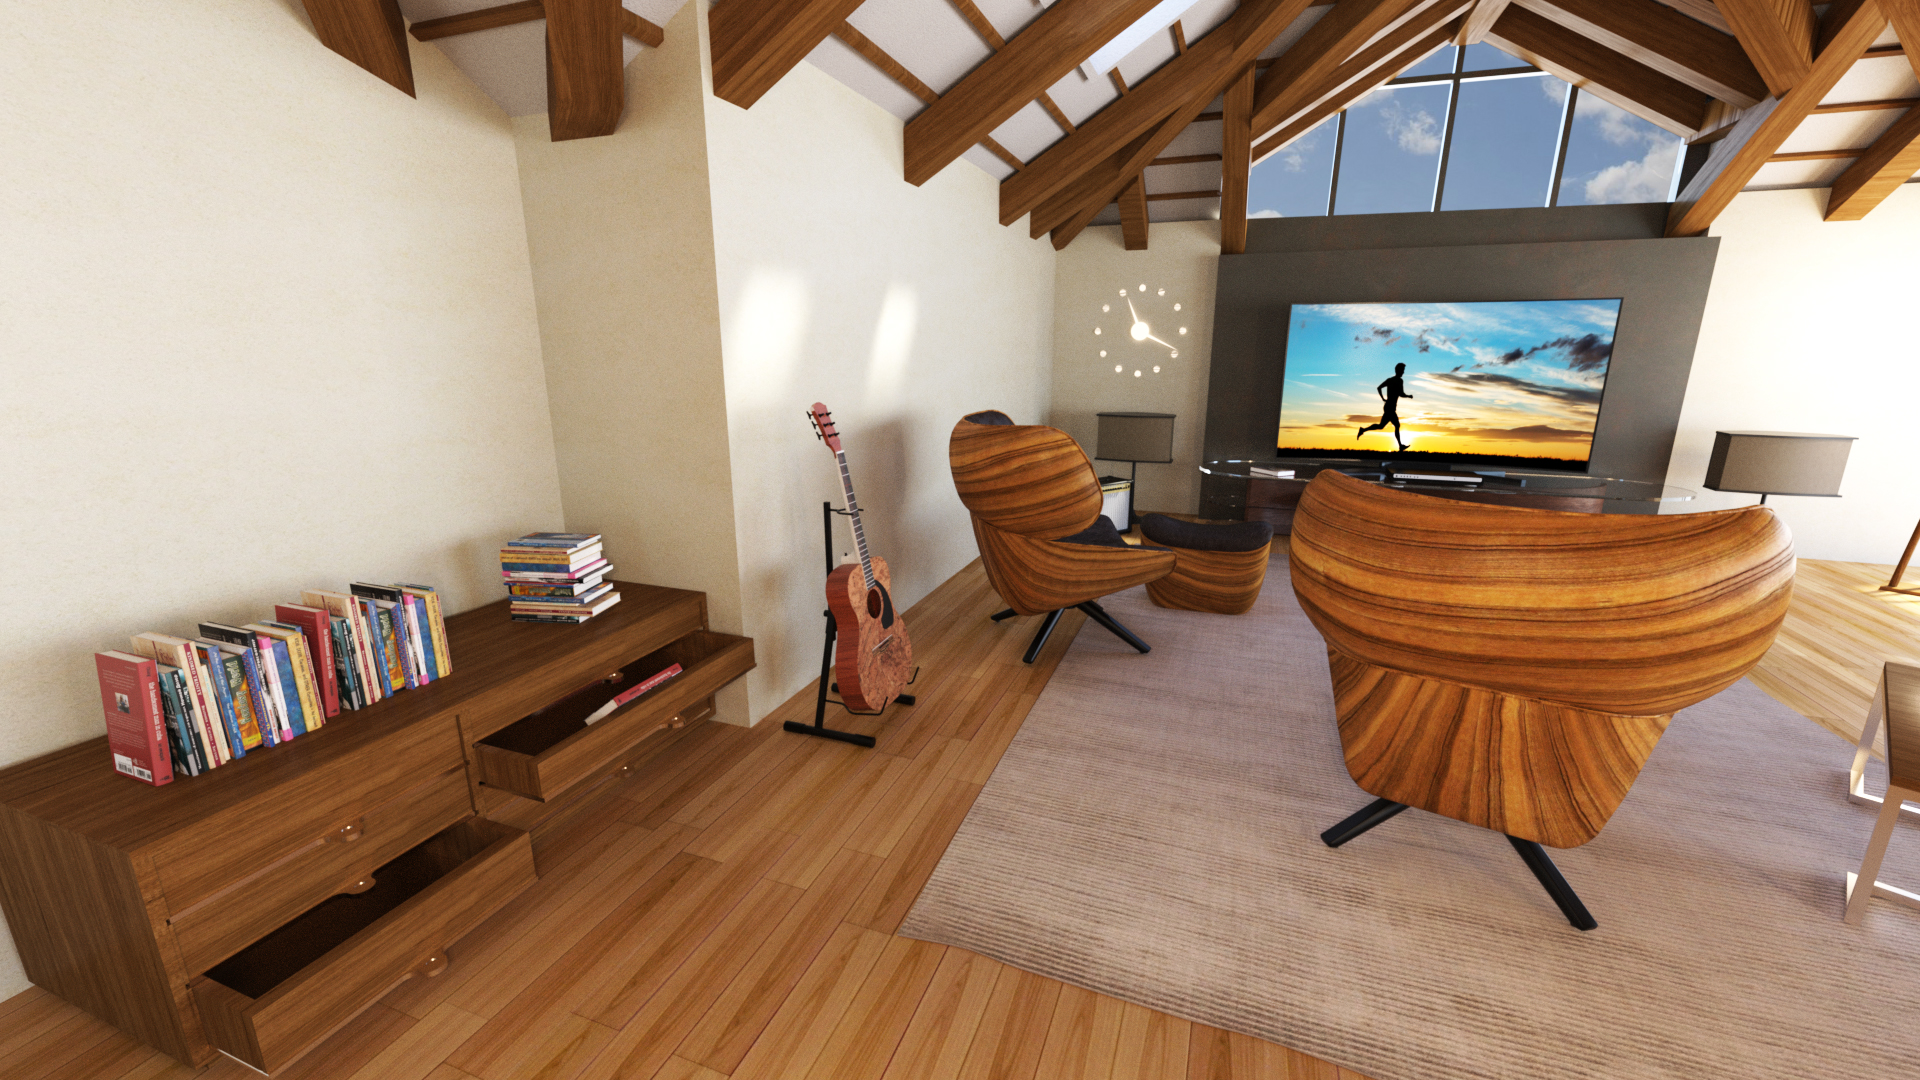 Attic Entertainment Room by: Tesla3dCorp, 3D Models by Daz 3D